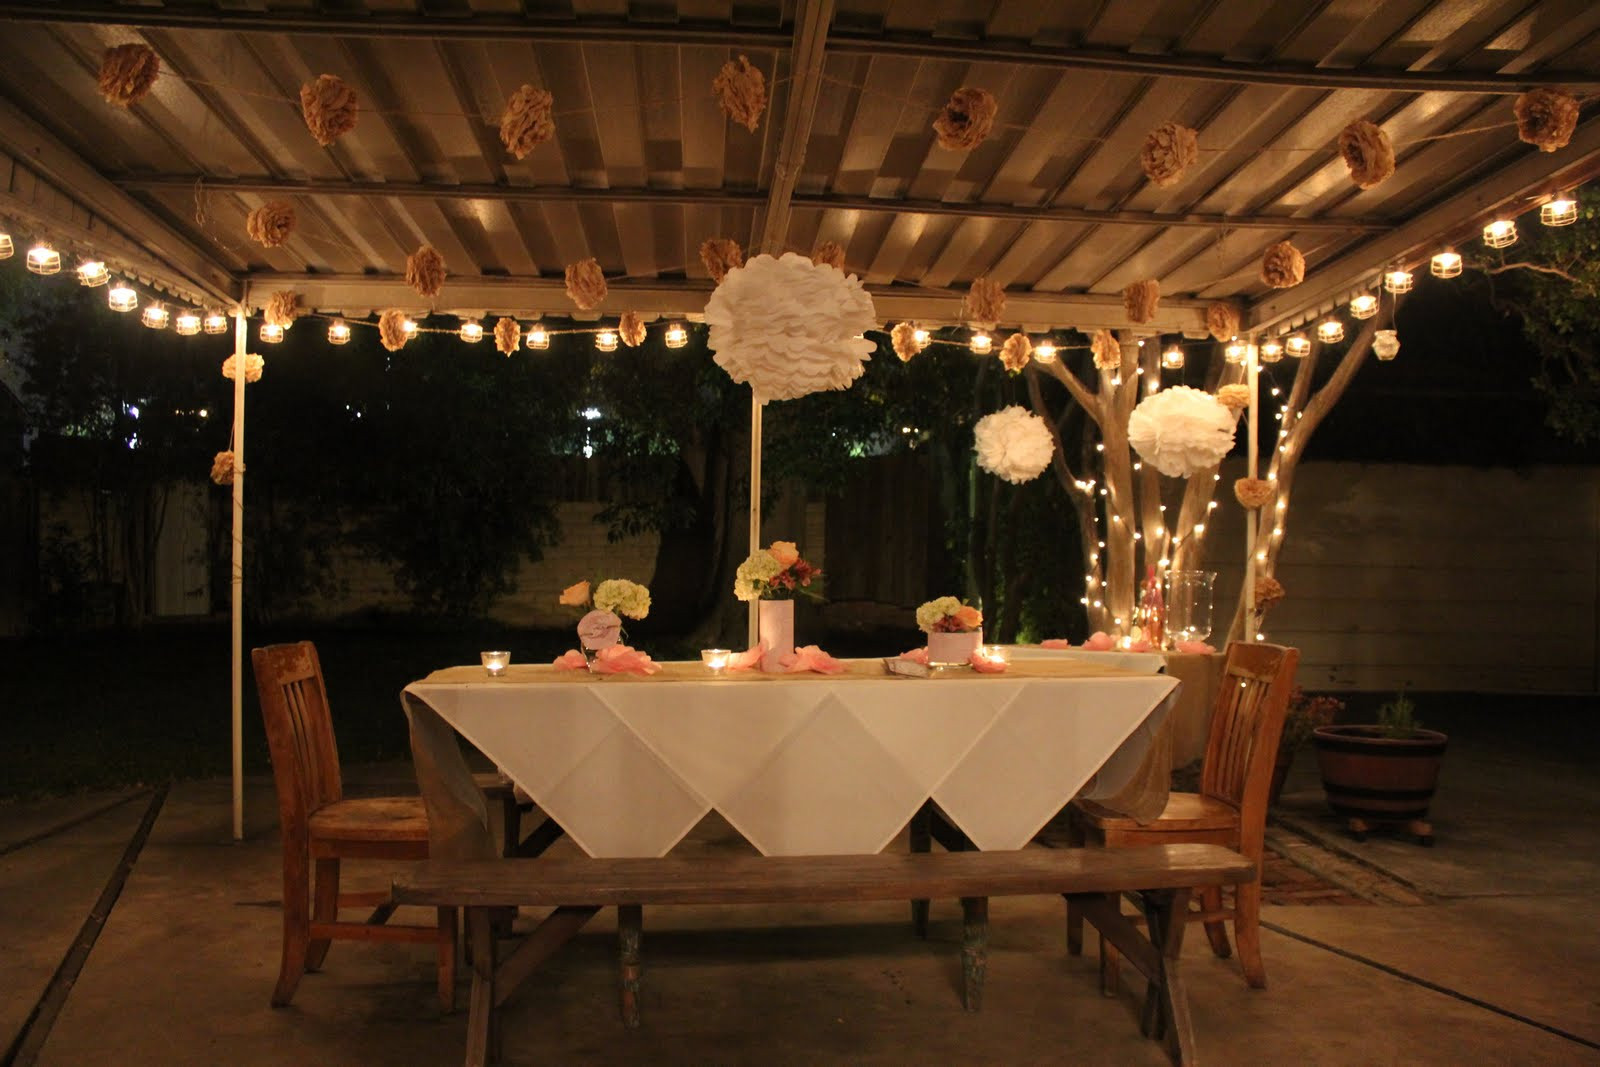 Elegant Backyard Party Ideas
 Juneberry Lane Outdoor Champagne Soirée A Simple